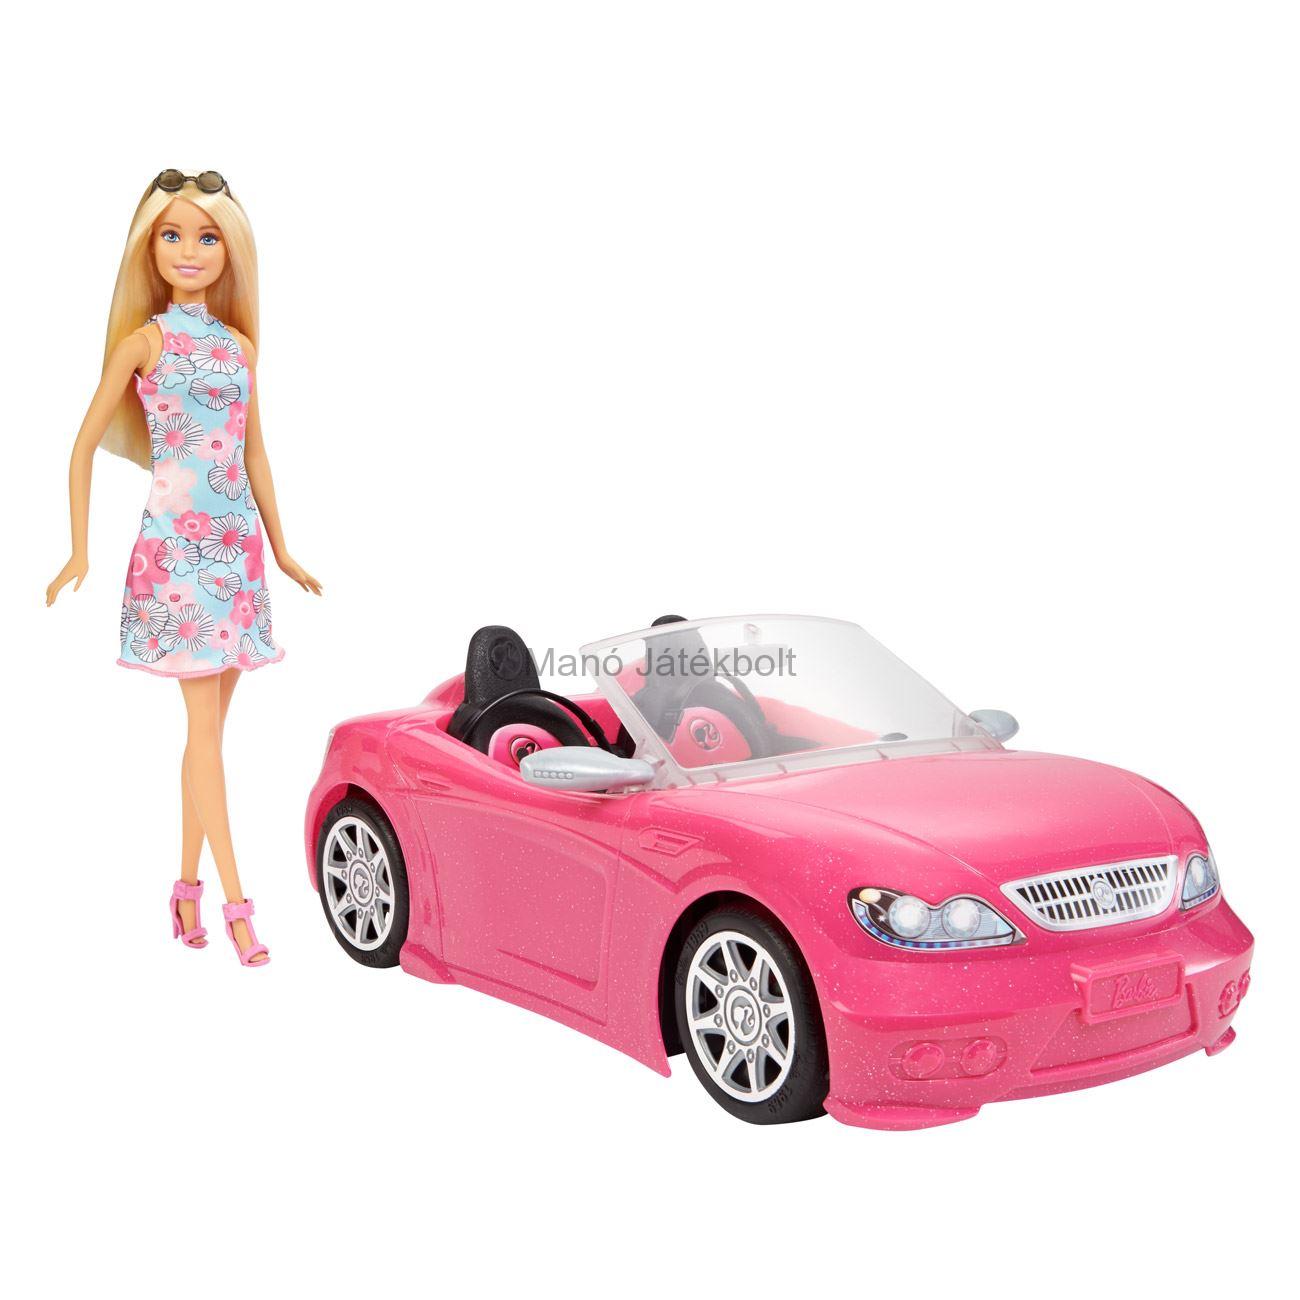 Lany Jatekok Barbie Auto Babaval Manojatekbolt